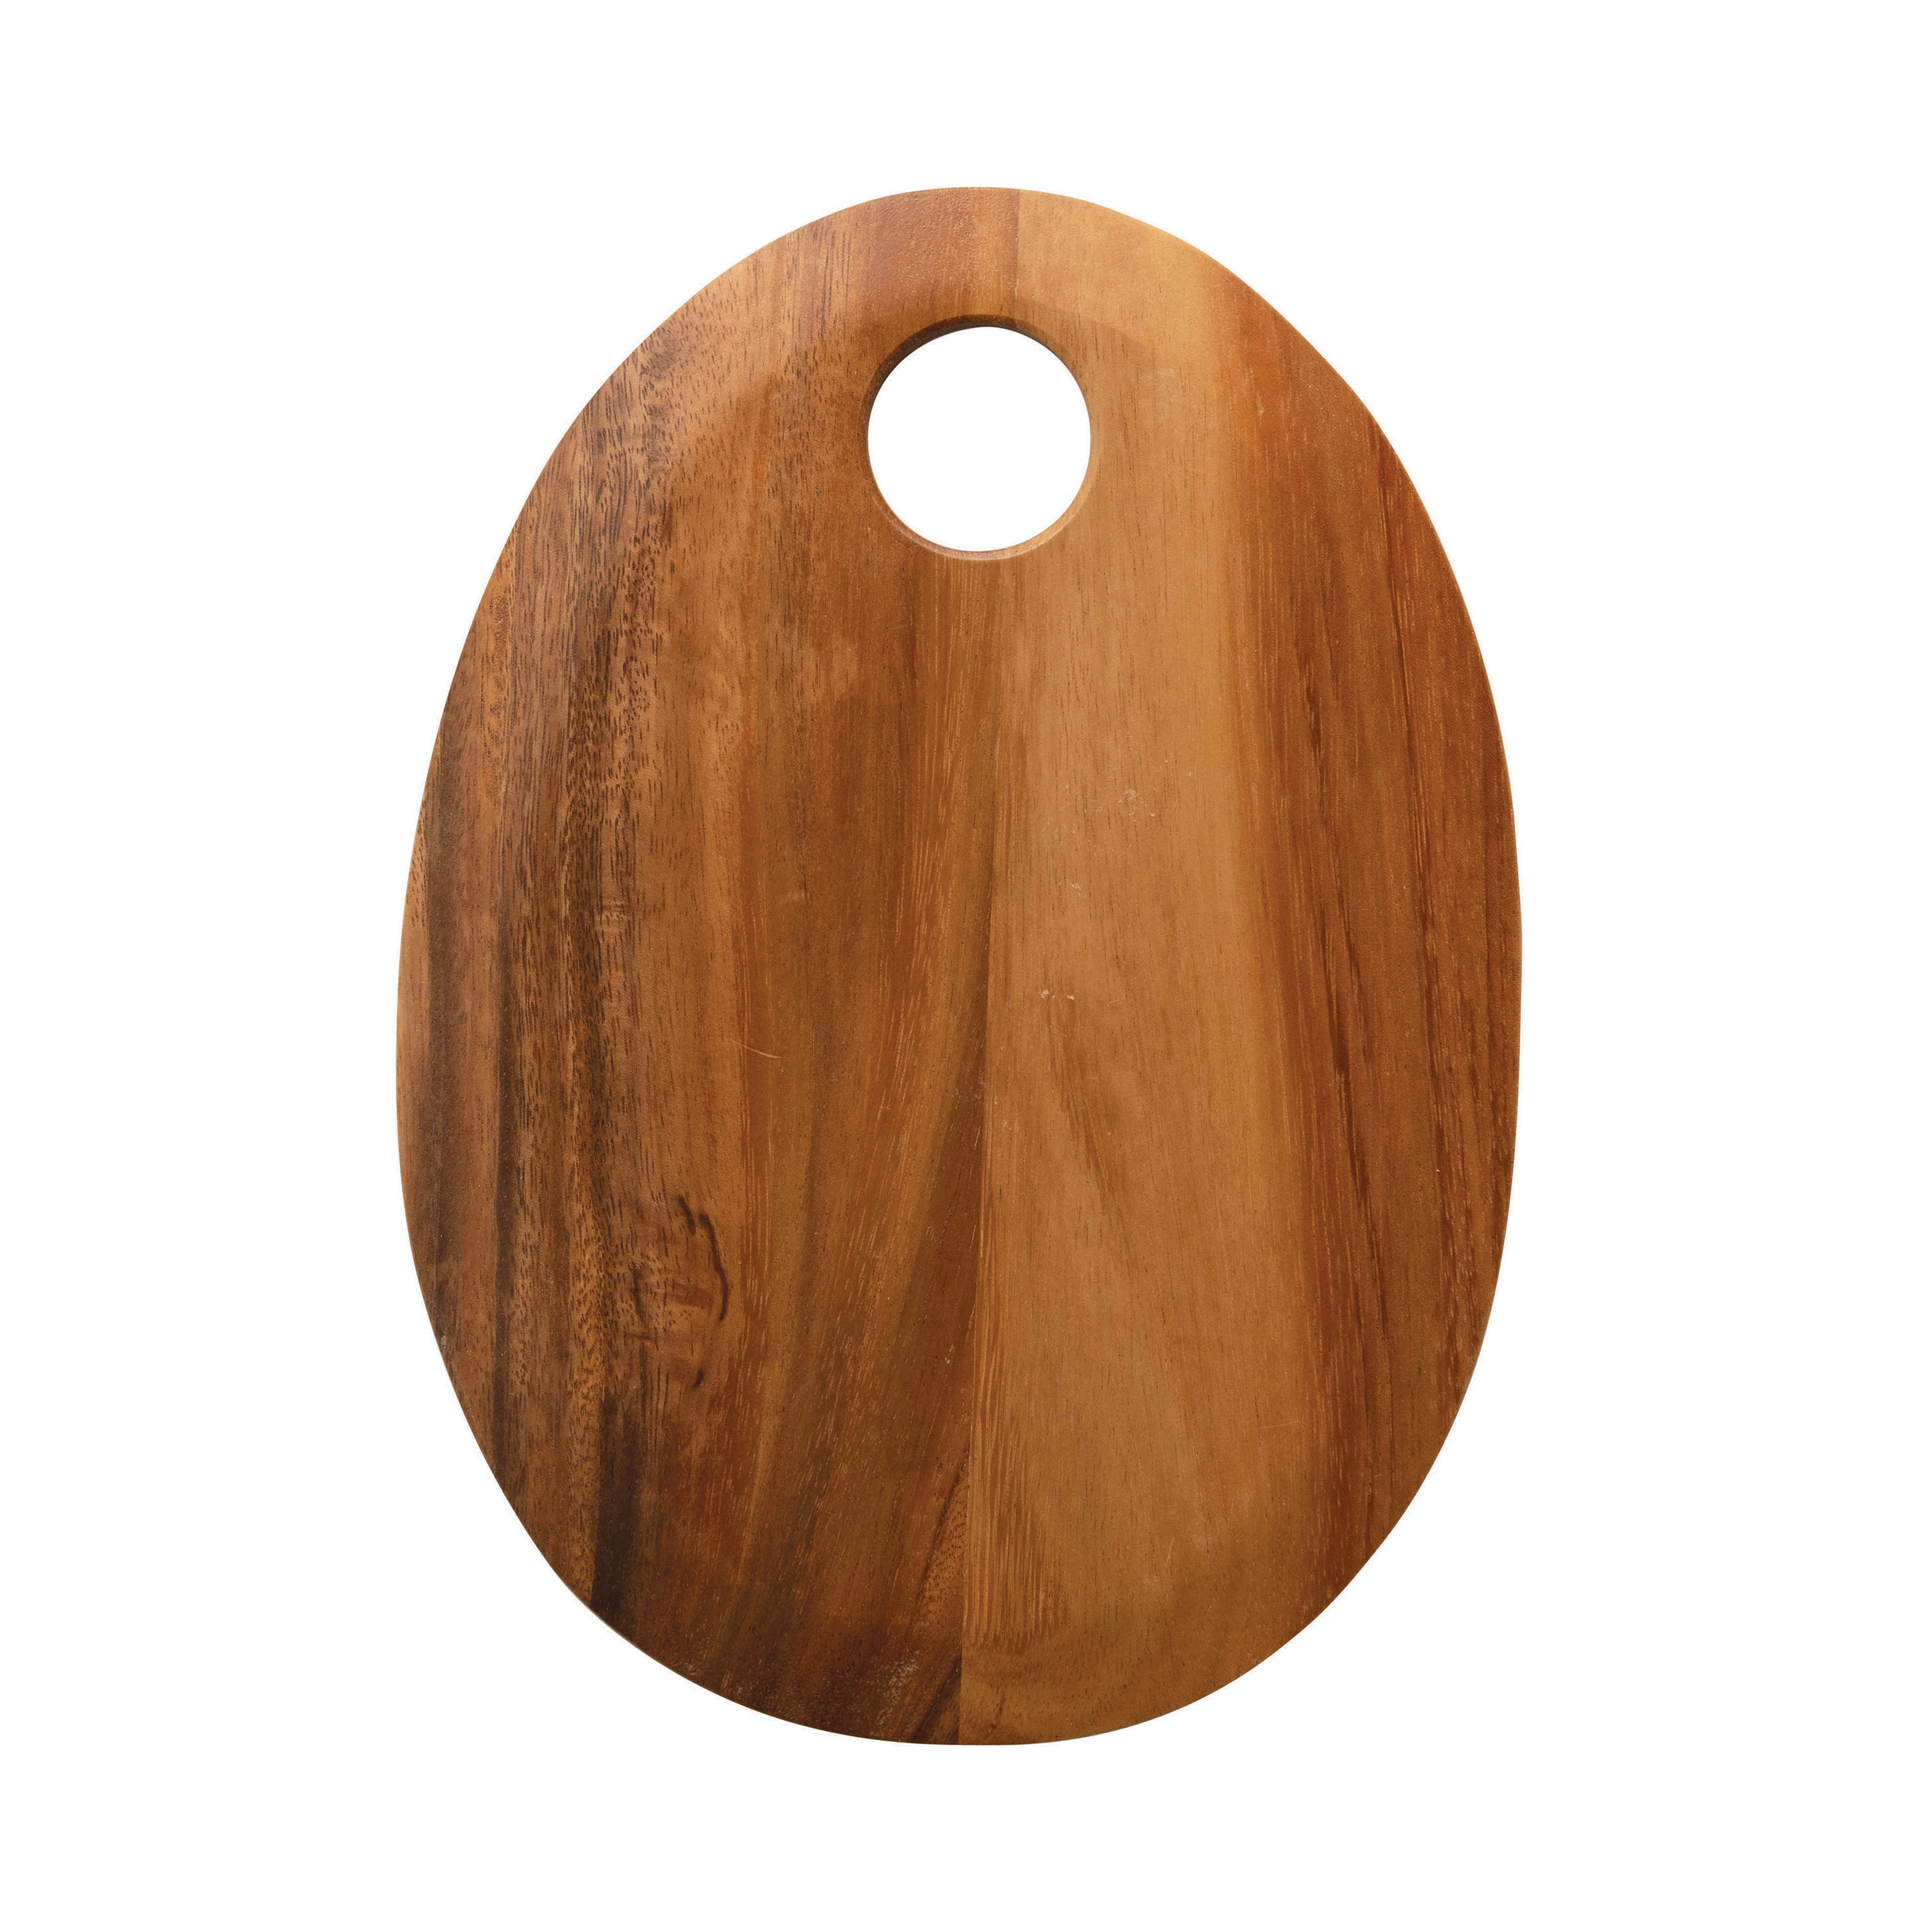 Suar Wood Cheese/Cutting Board - Image 0